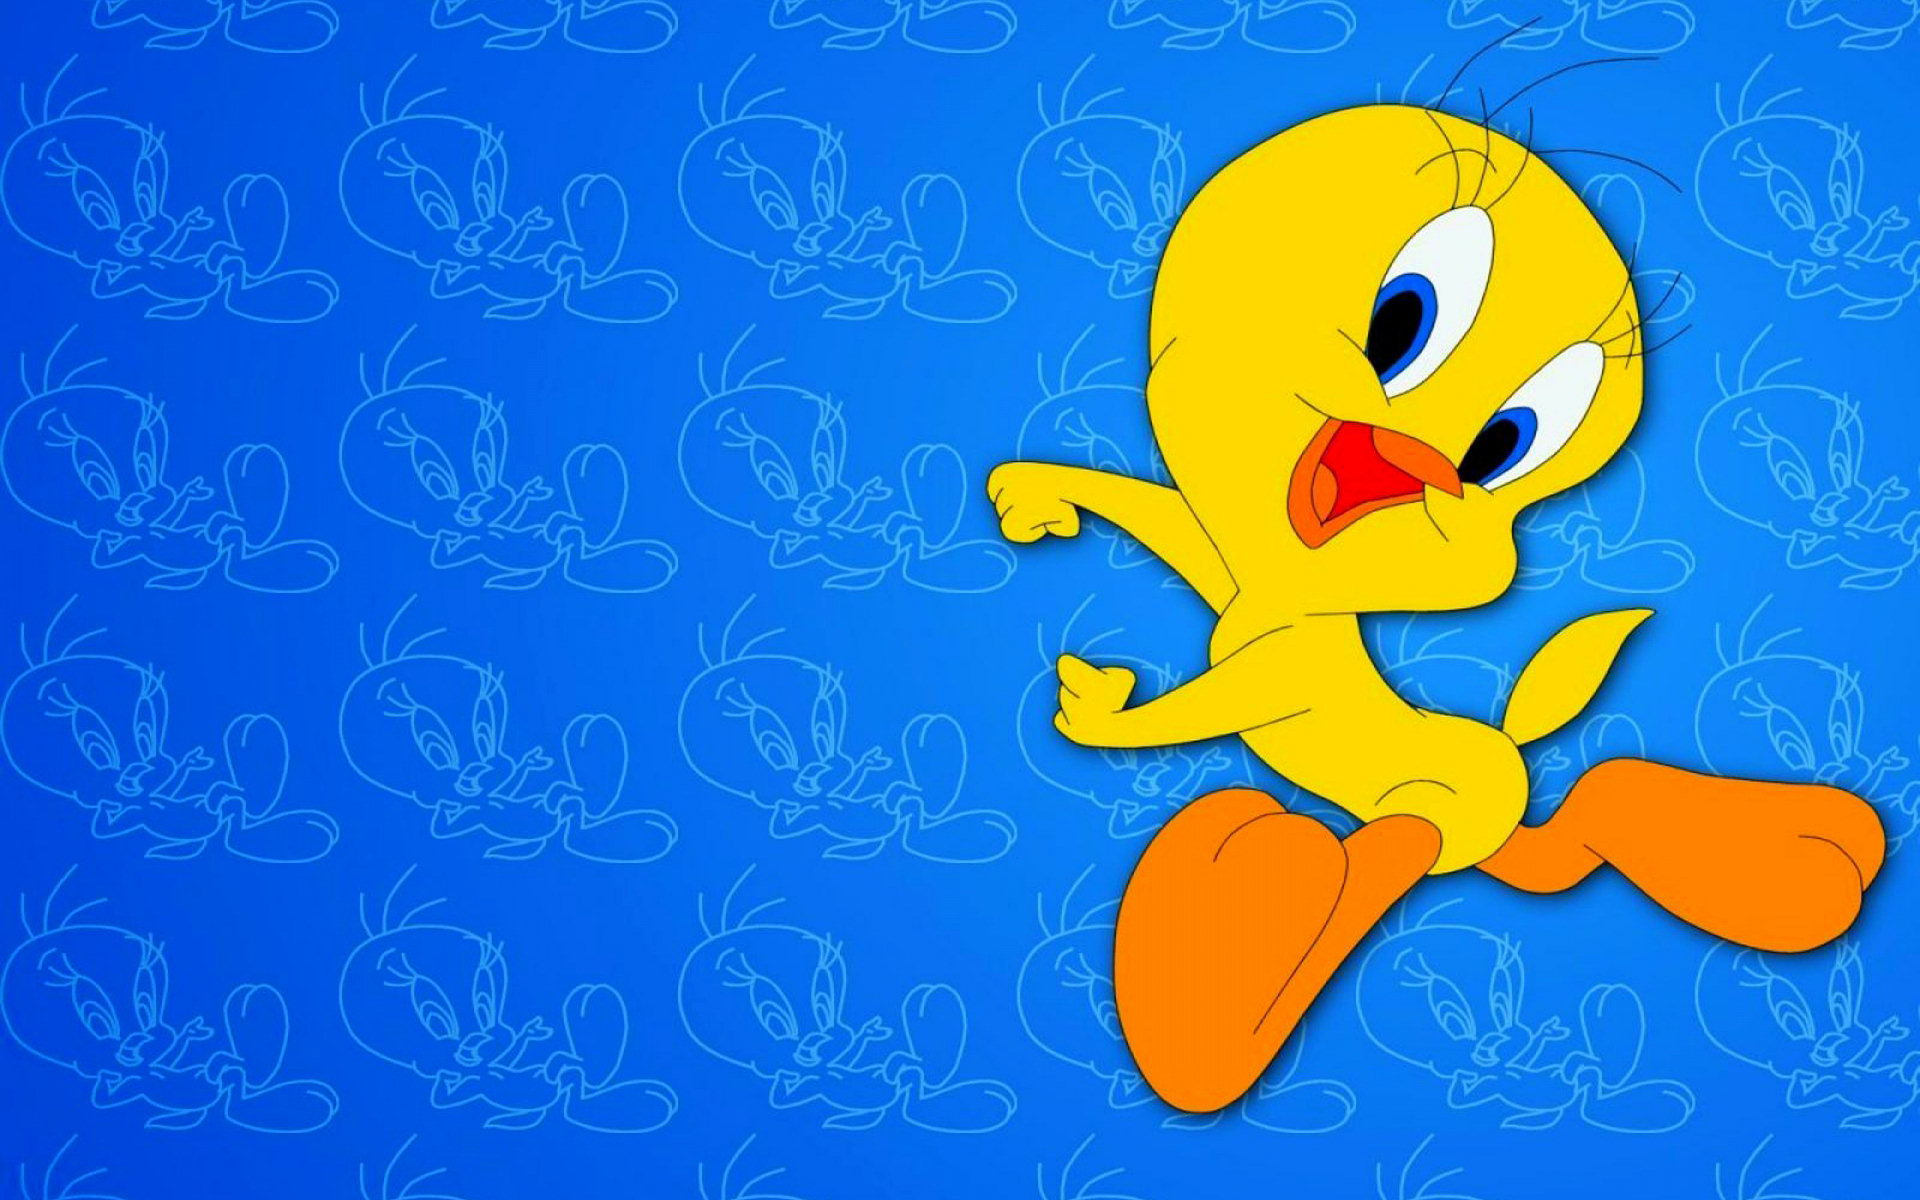 tweety wallpaper hd,animated cartoon,cartoon,blue,yellow,illustration